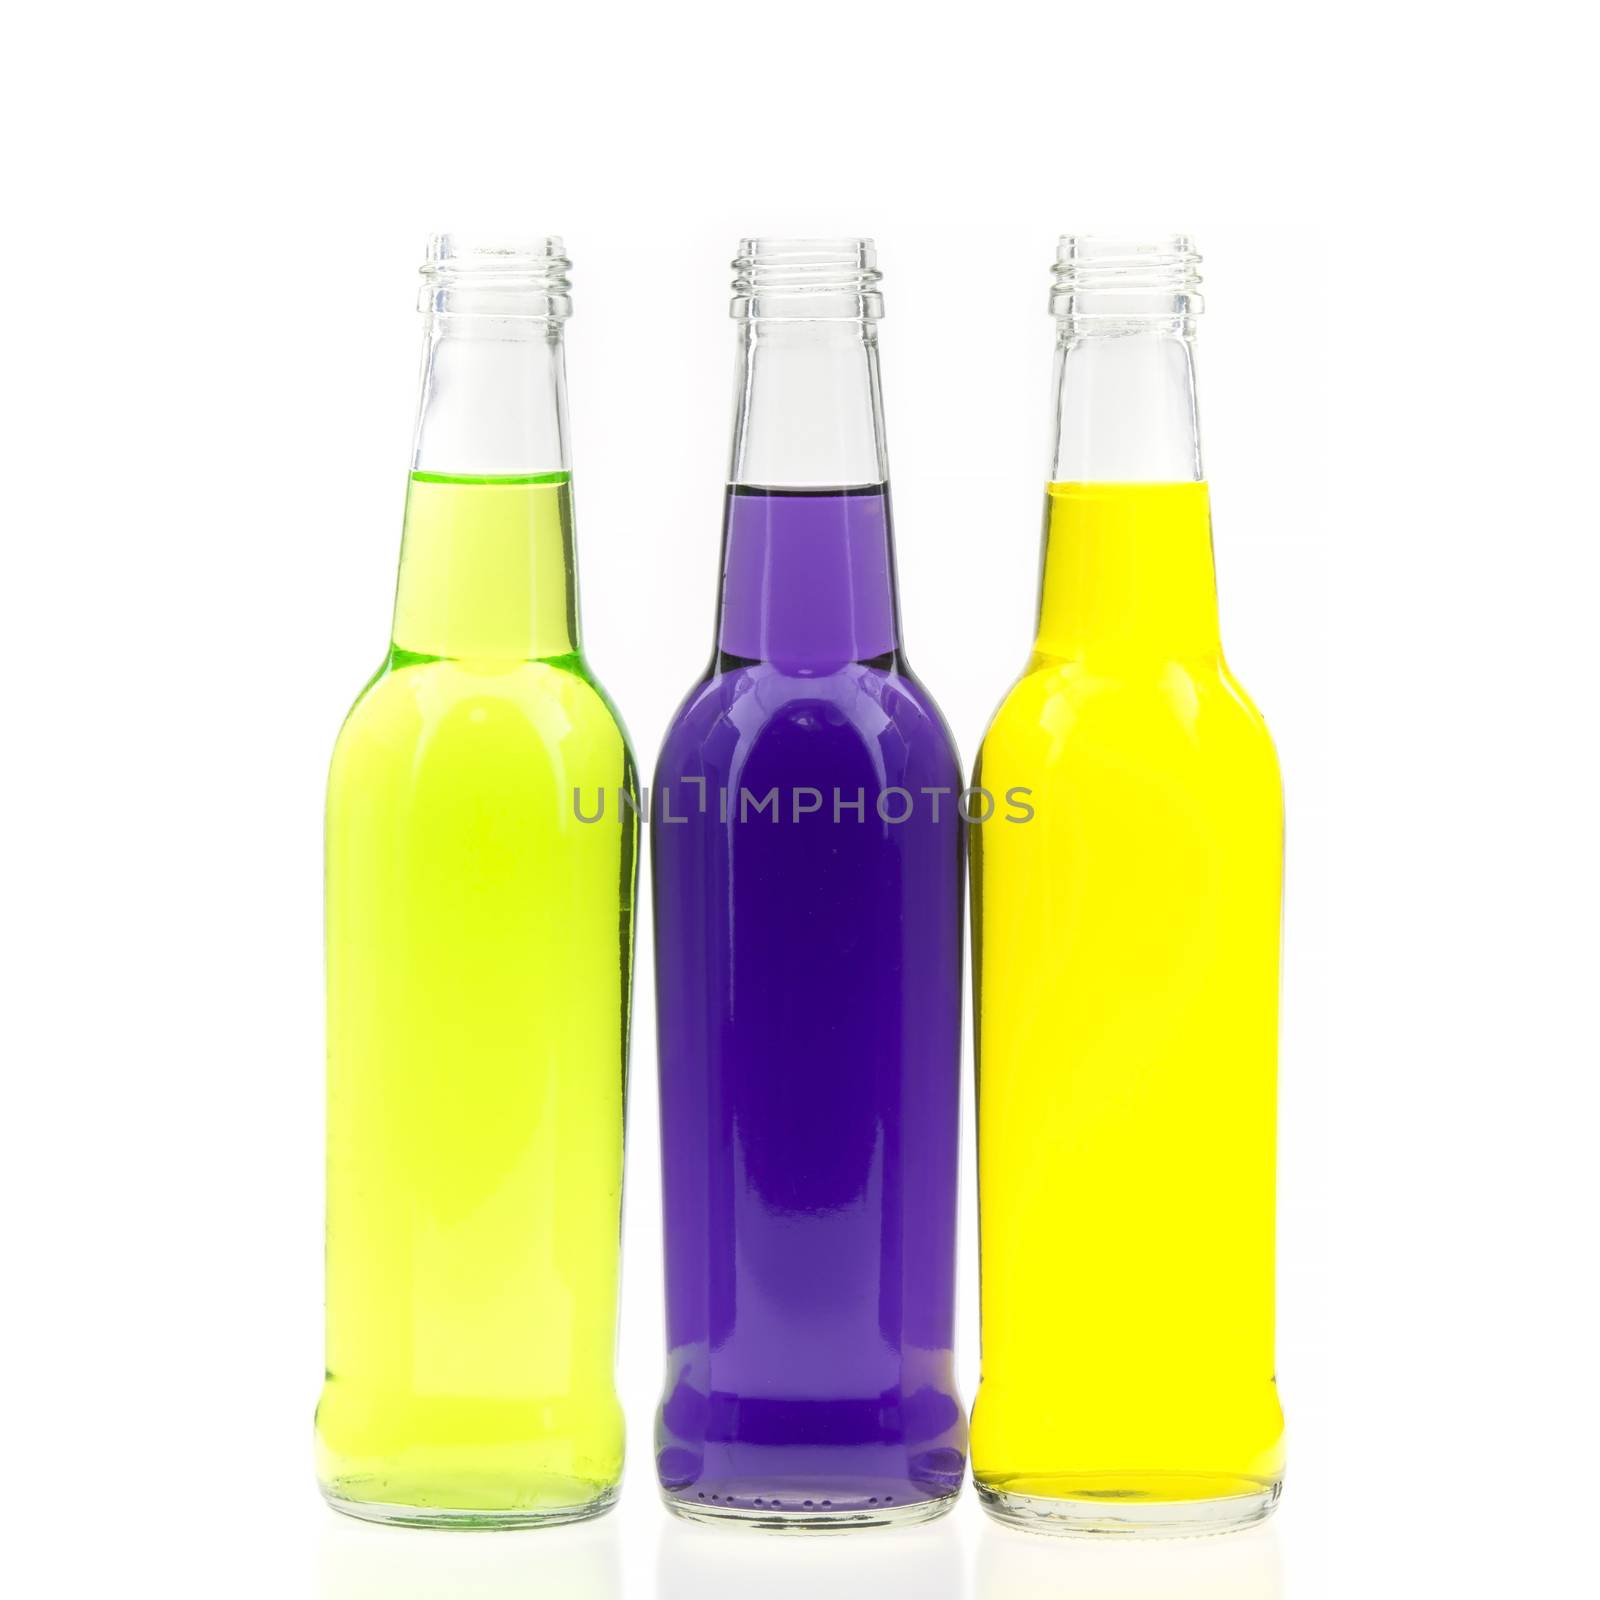 colorful bottles by panuruangjan